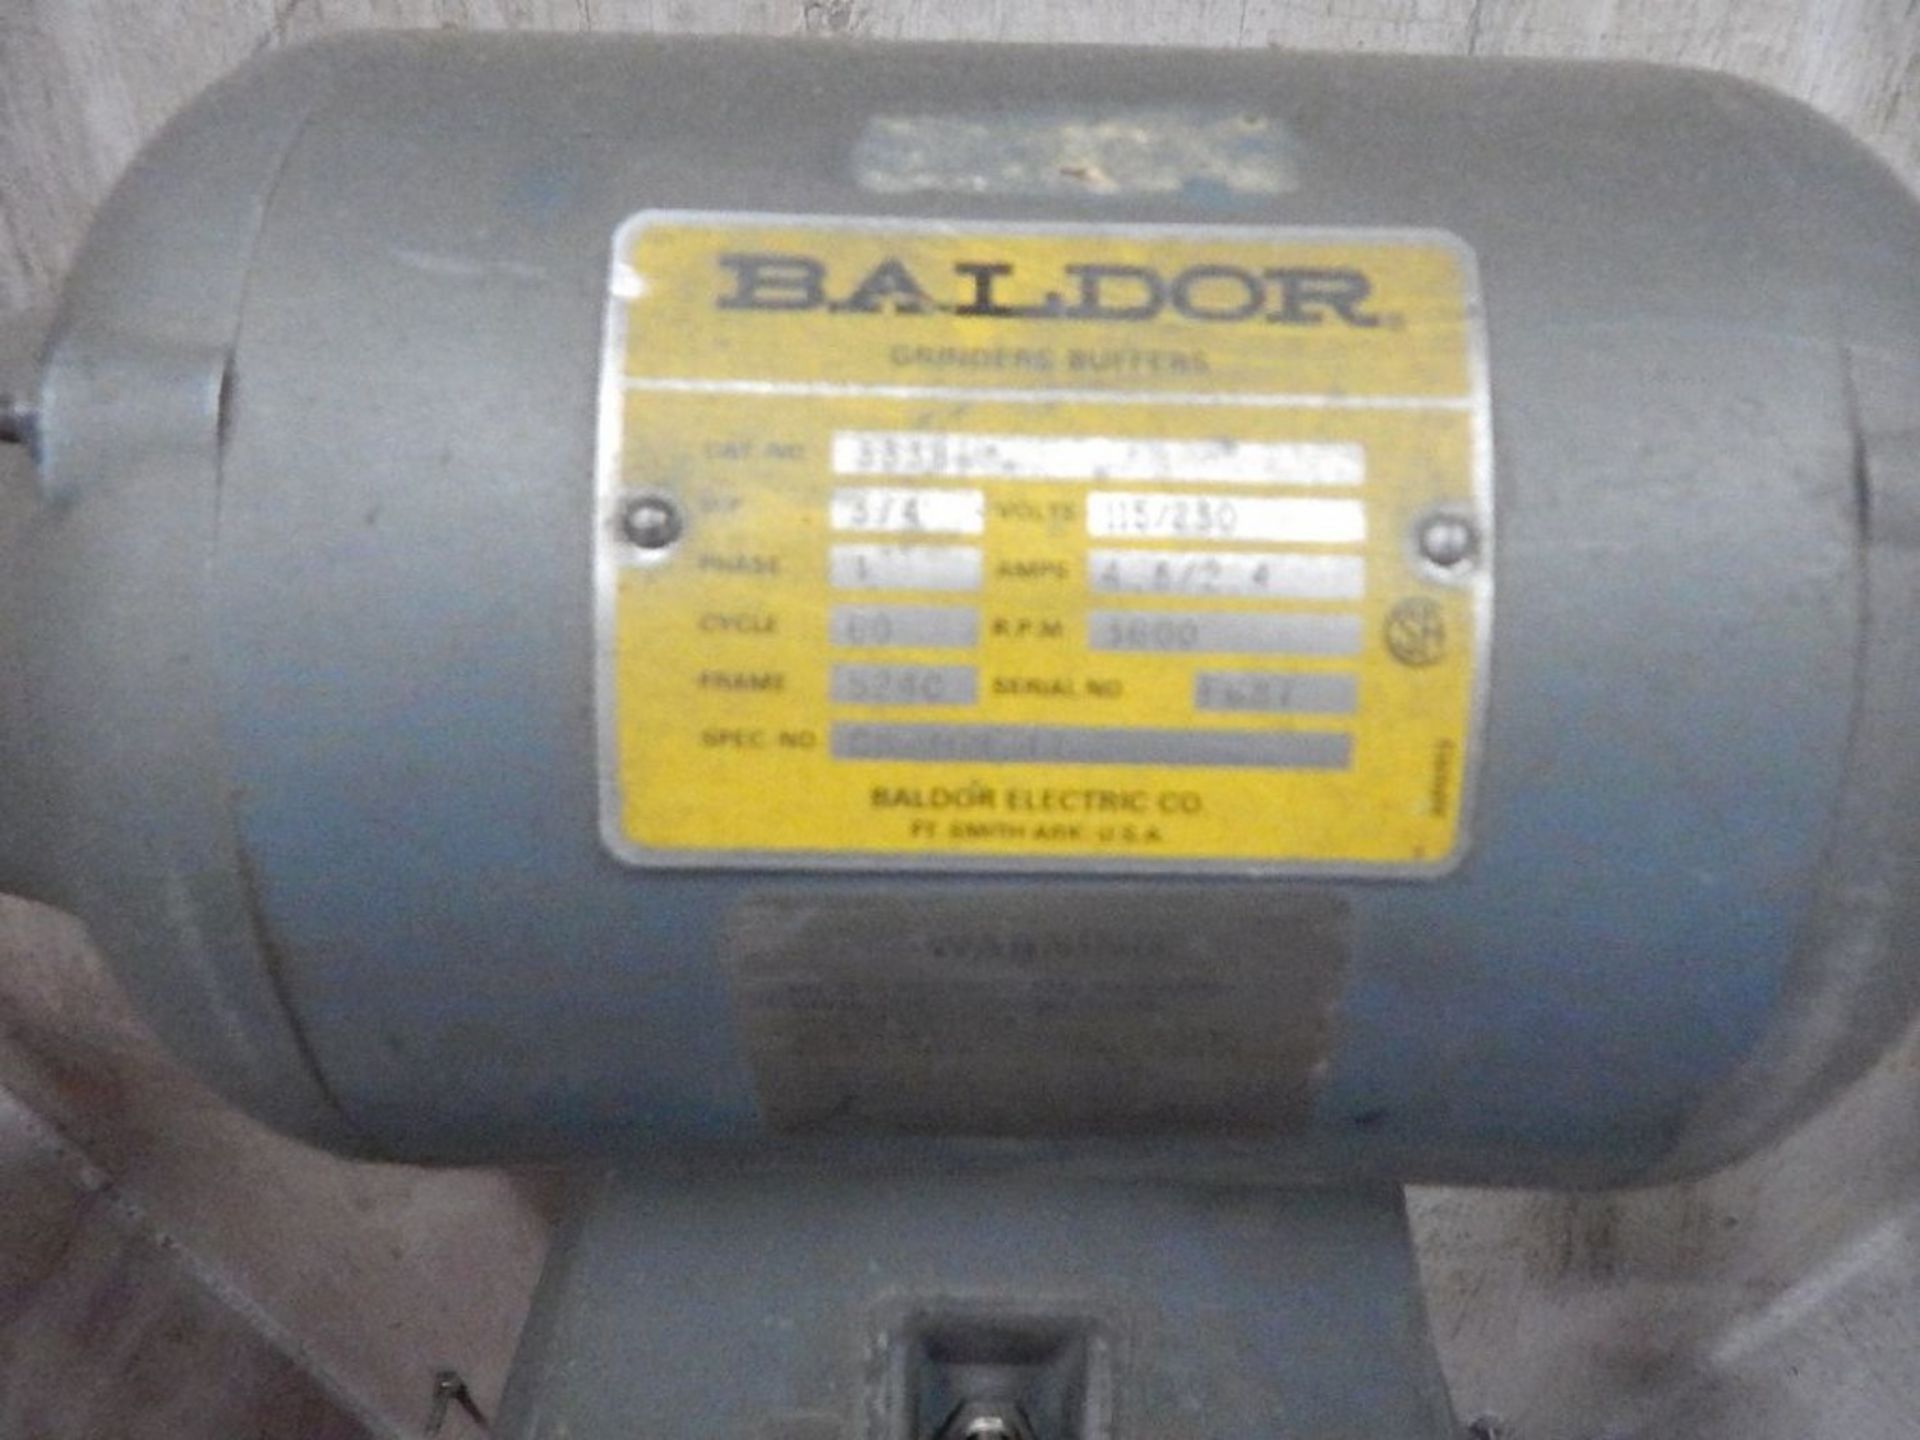 BALDOR 3/4HP DOUBLE END PEDISTAL BUFFER - Image 4 of 4